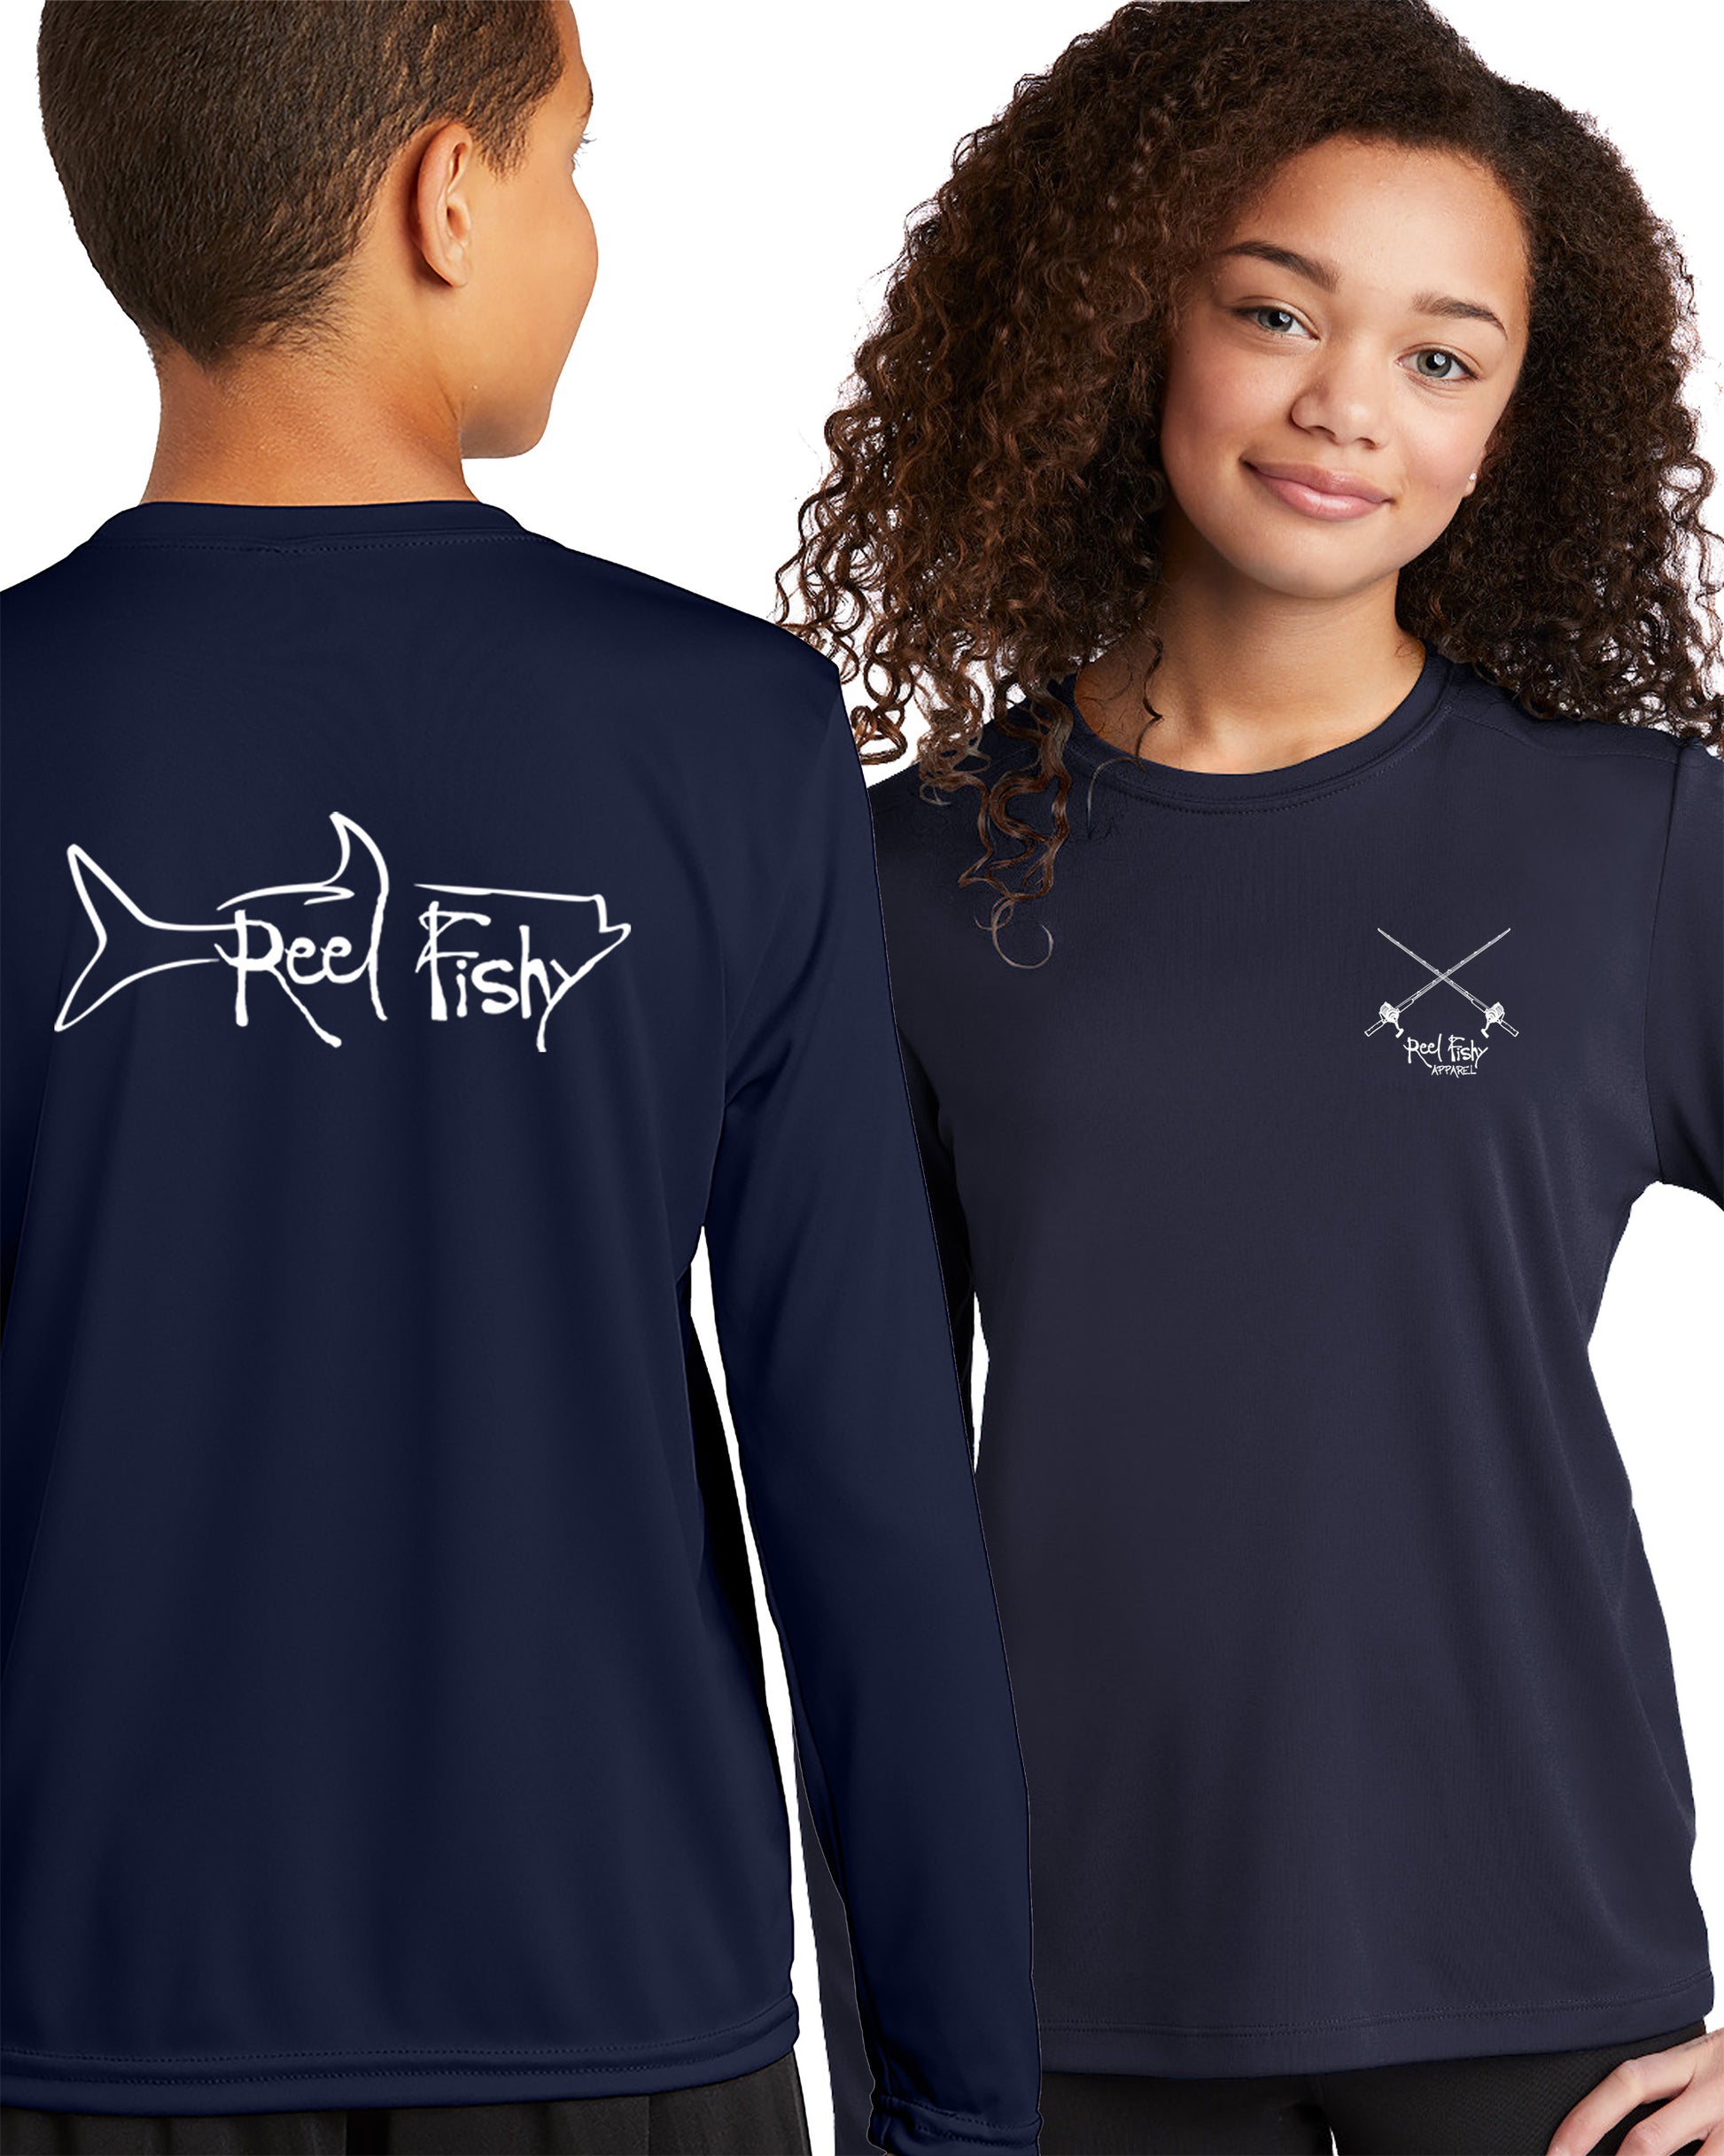 Youth UPF 50+ Long Sleeve Fishing Shirt FS01Y